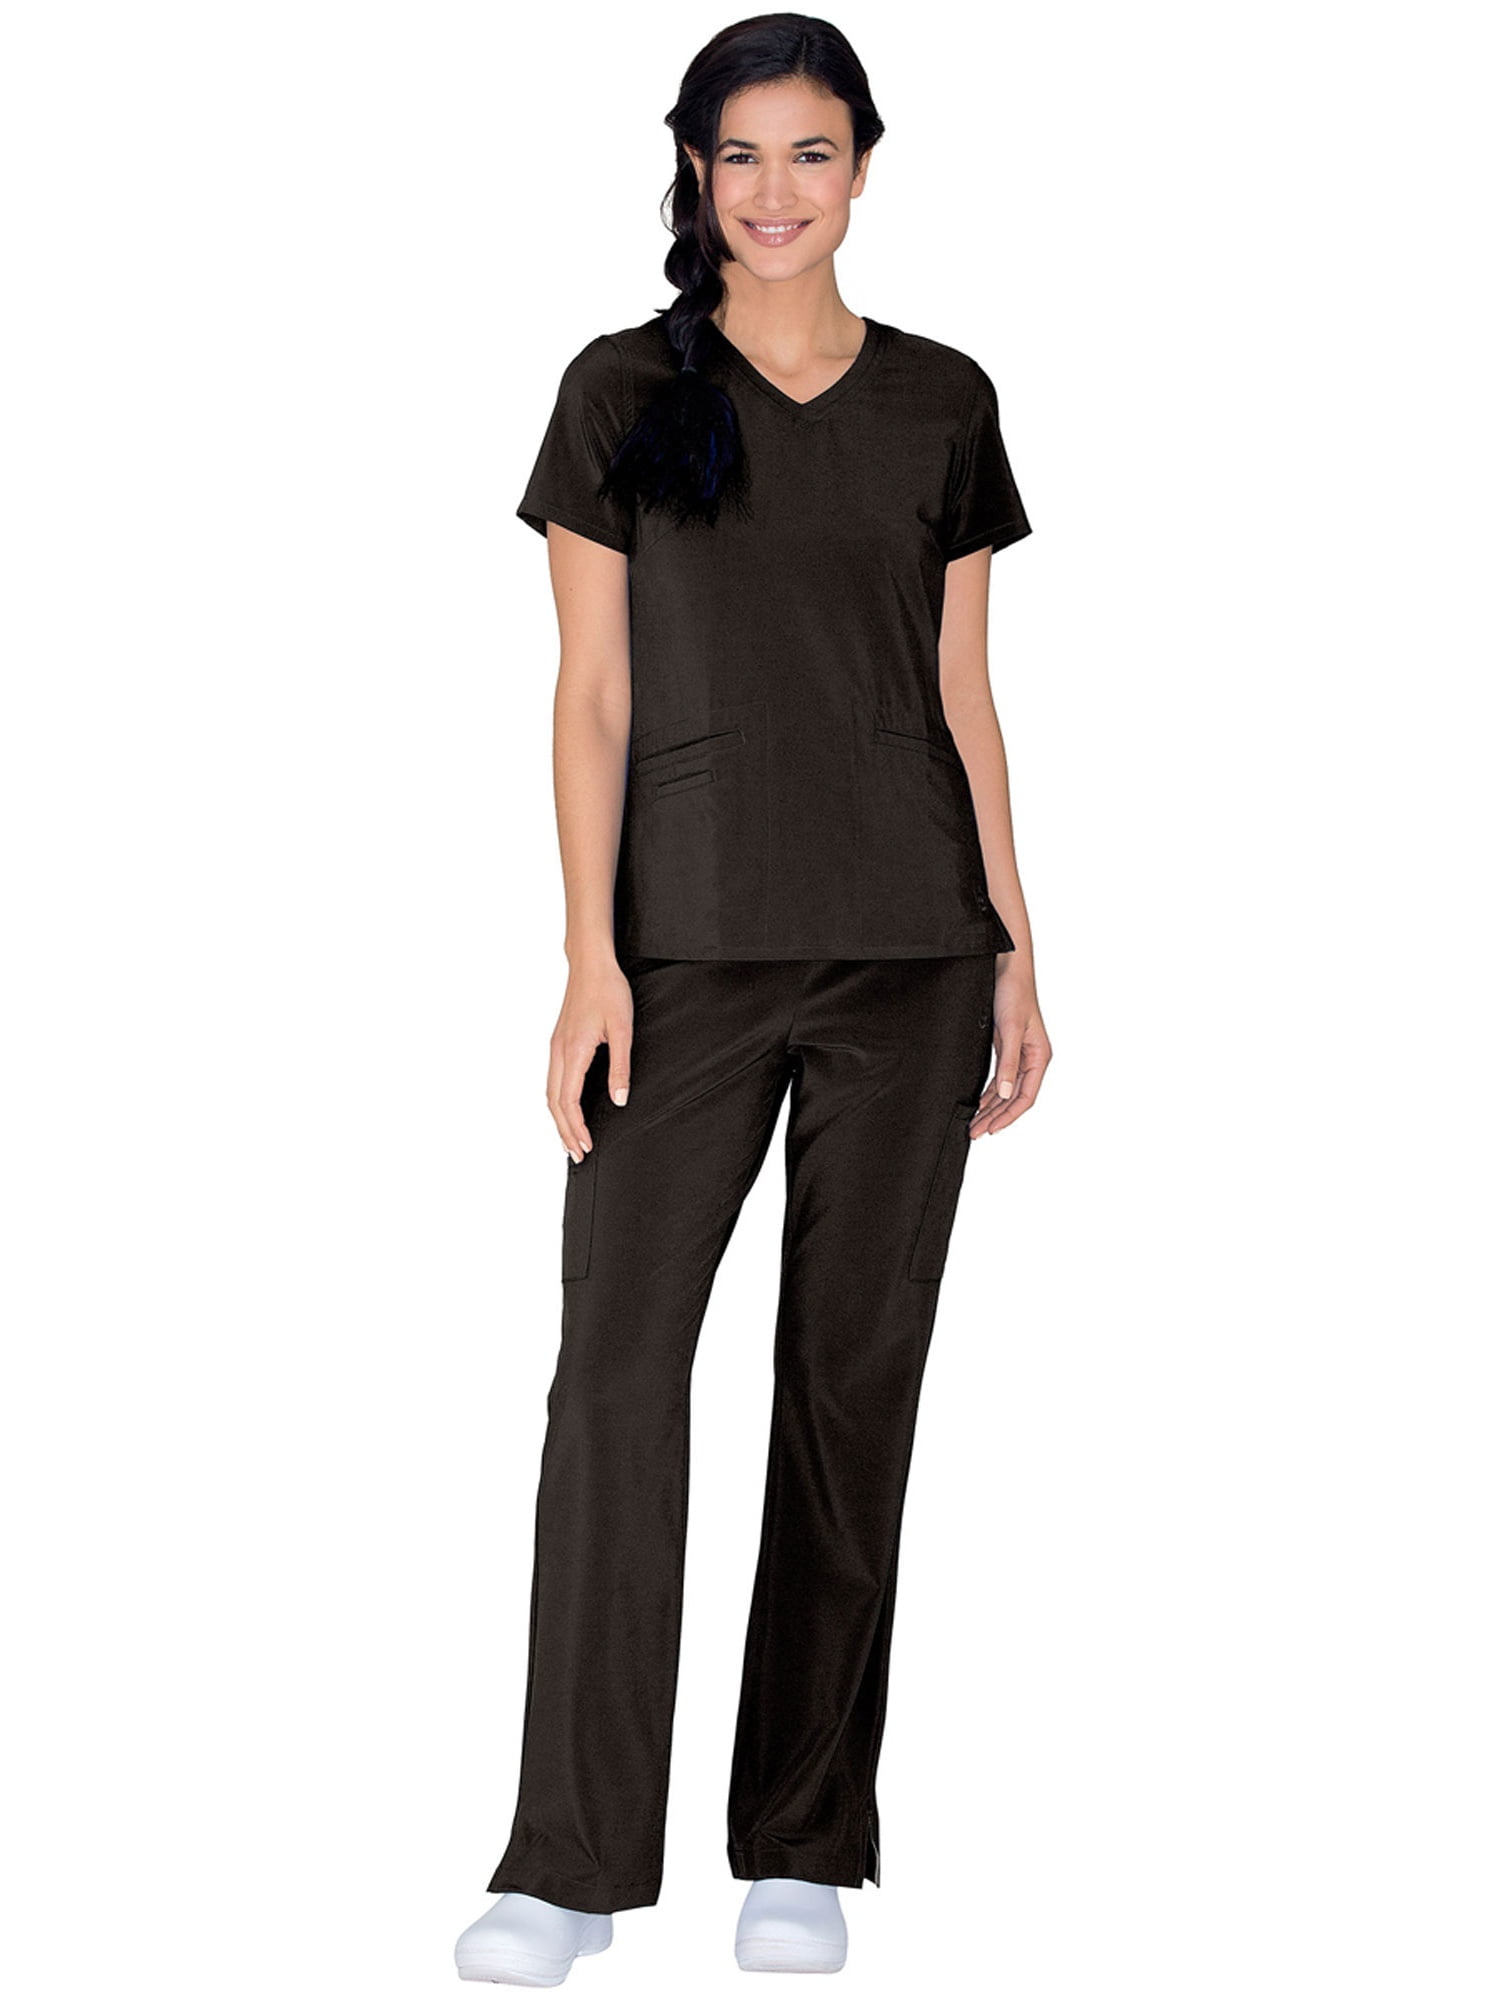 Urbane - Urbane Women's V-Neck Short Sleeve Solid Scrub Top - Walmart.com